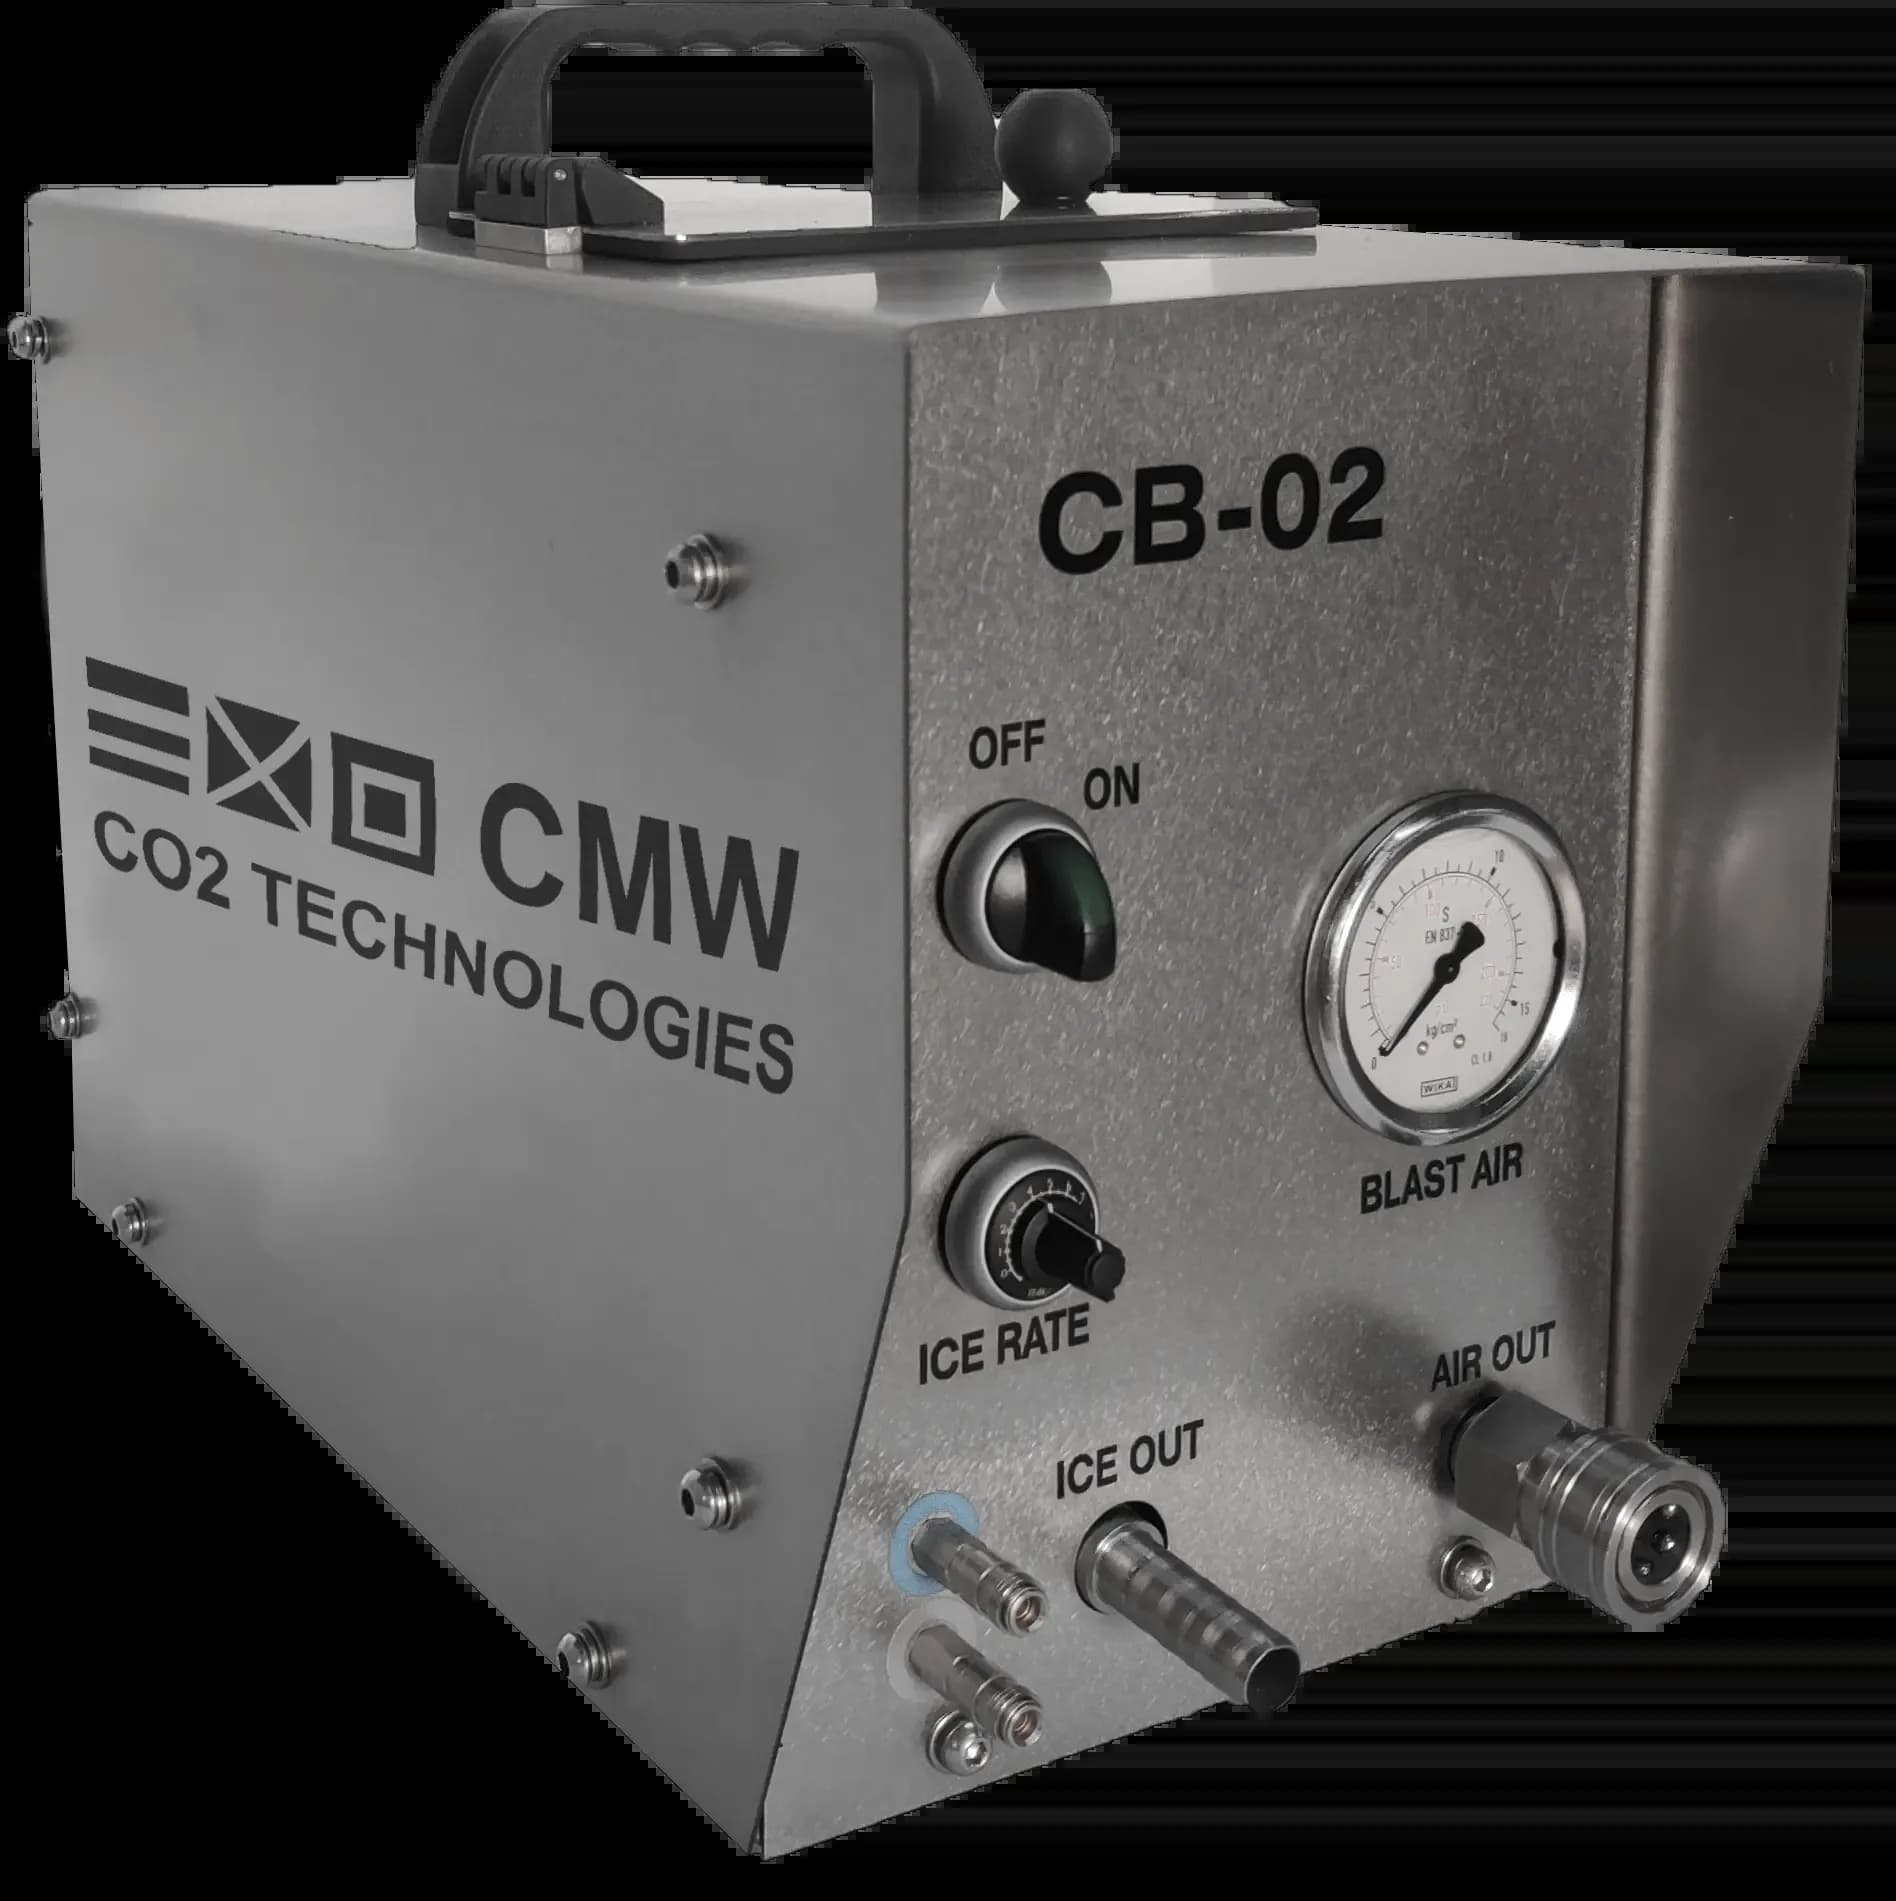 CB 02 CMW CO2 Technologies